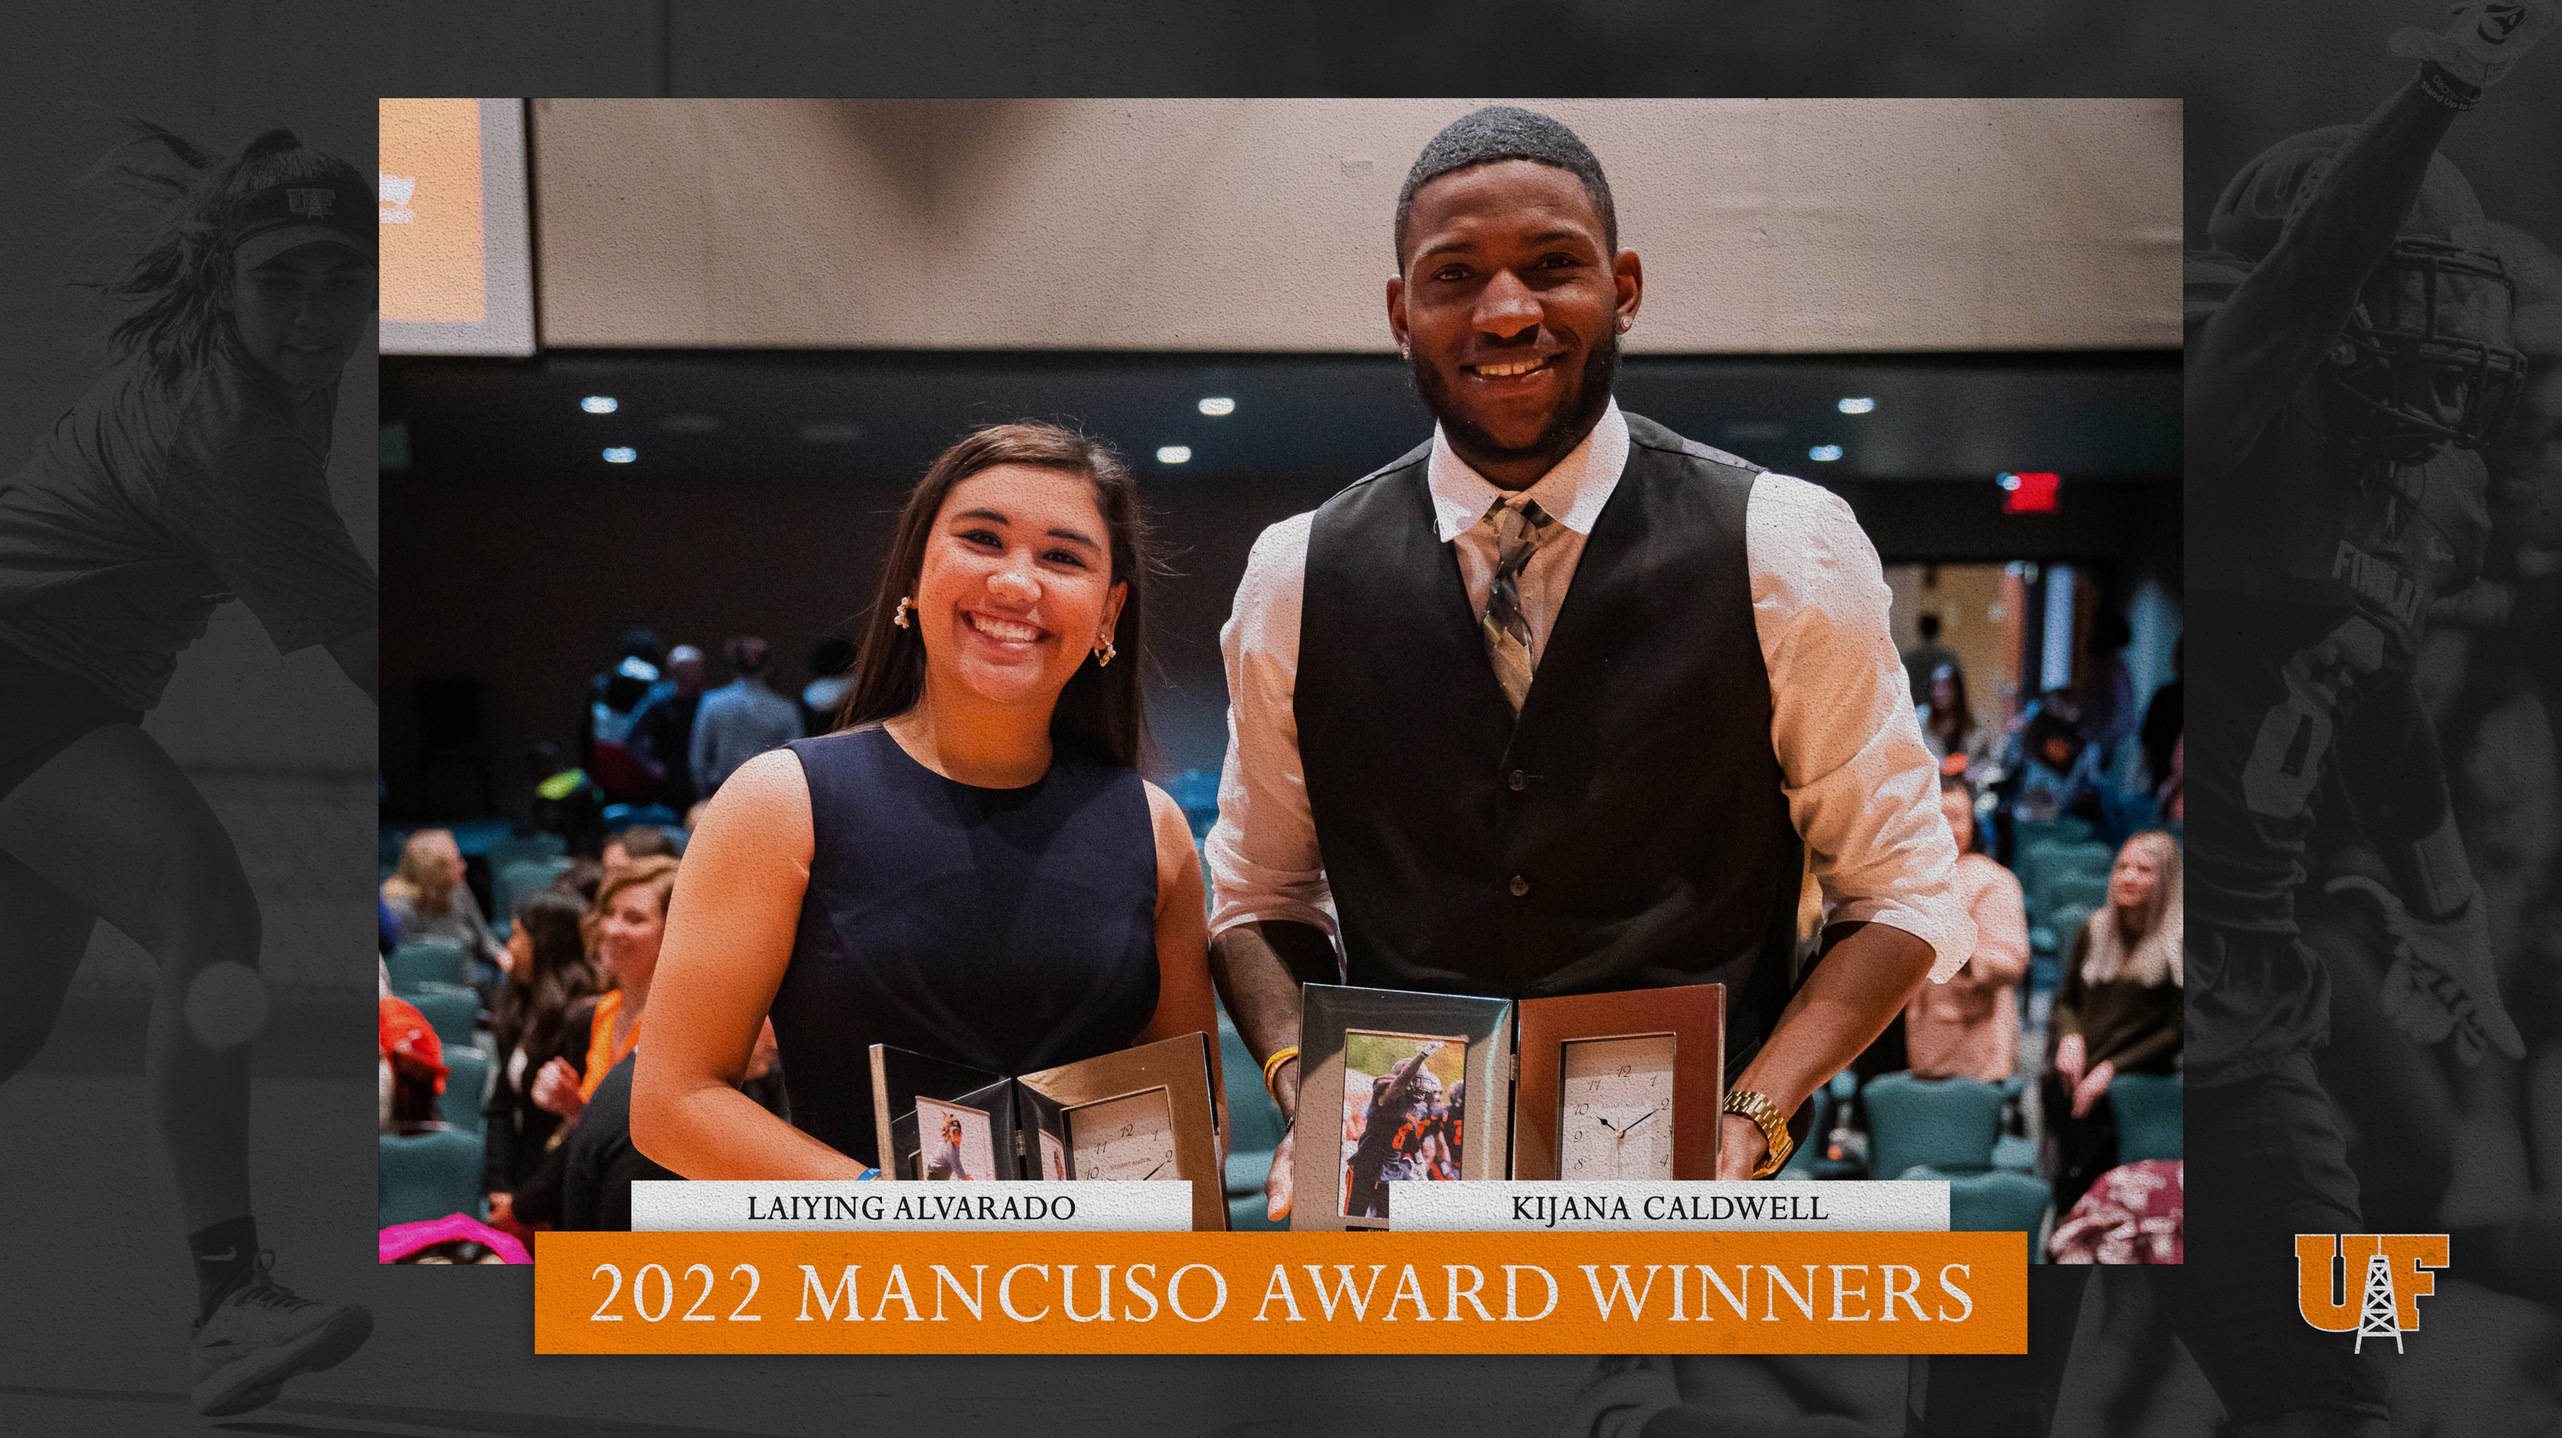 Laiying Alvarado and Kijana Caldwell Selected as Mancuso Award Winners